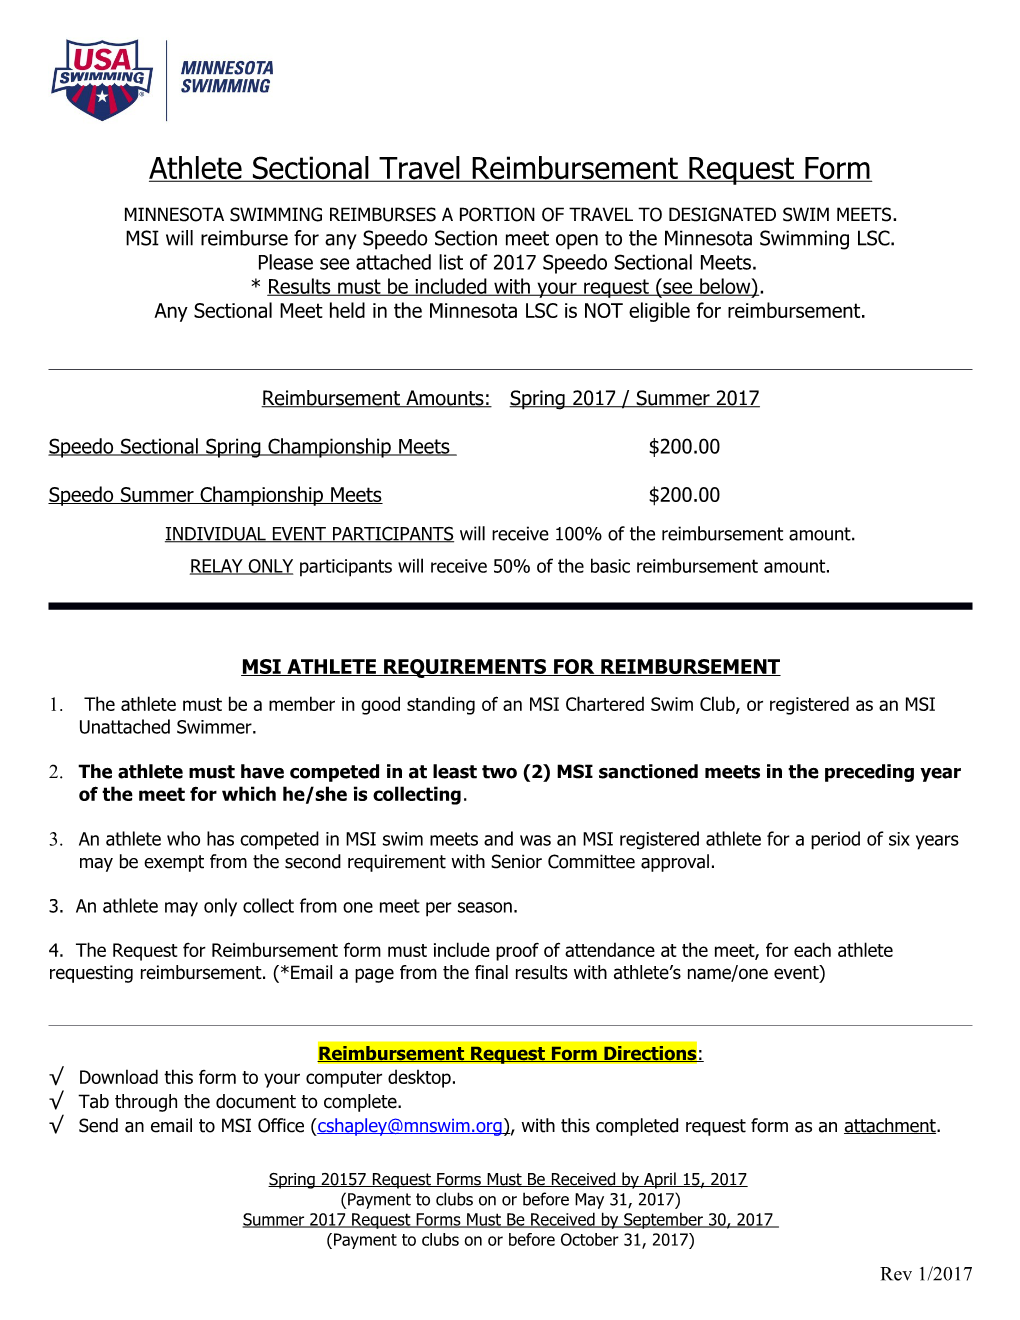 Minnesota Swimming National Travel Reimbursement Request Form